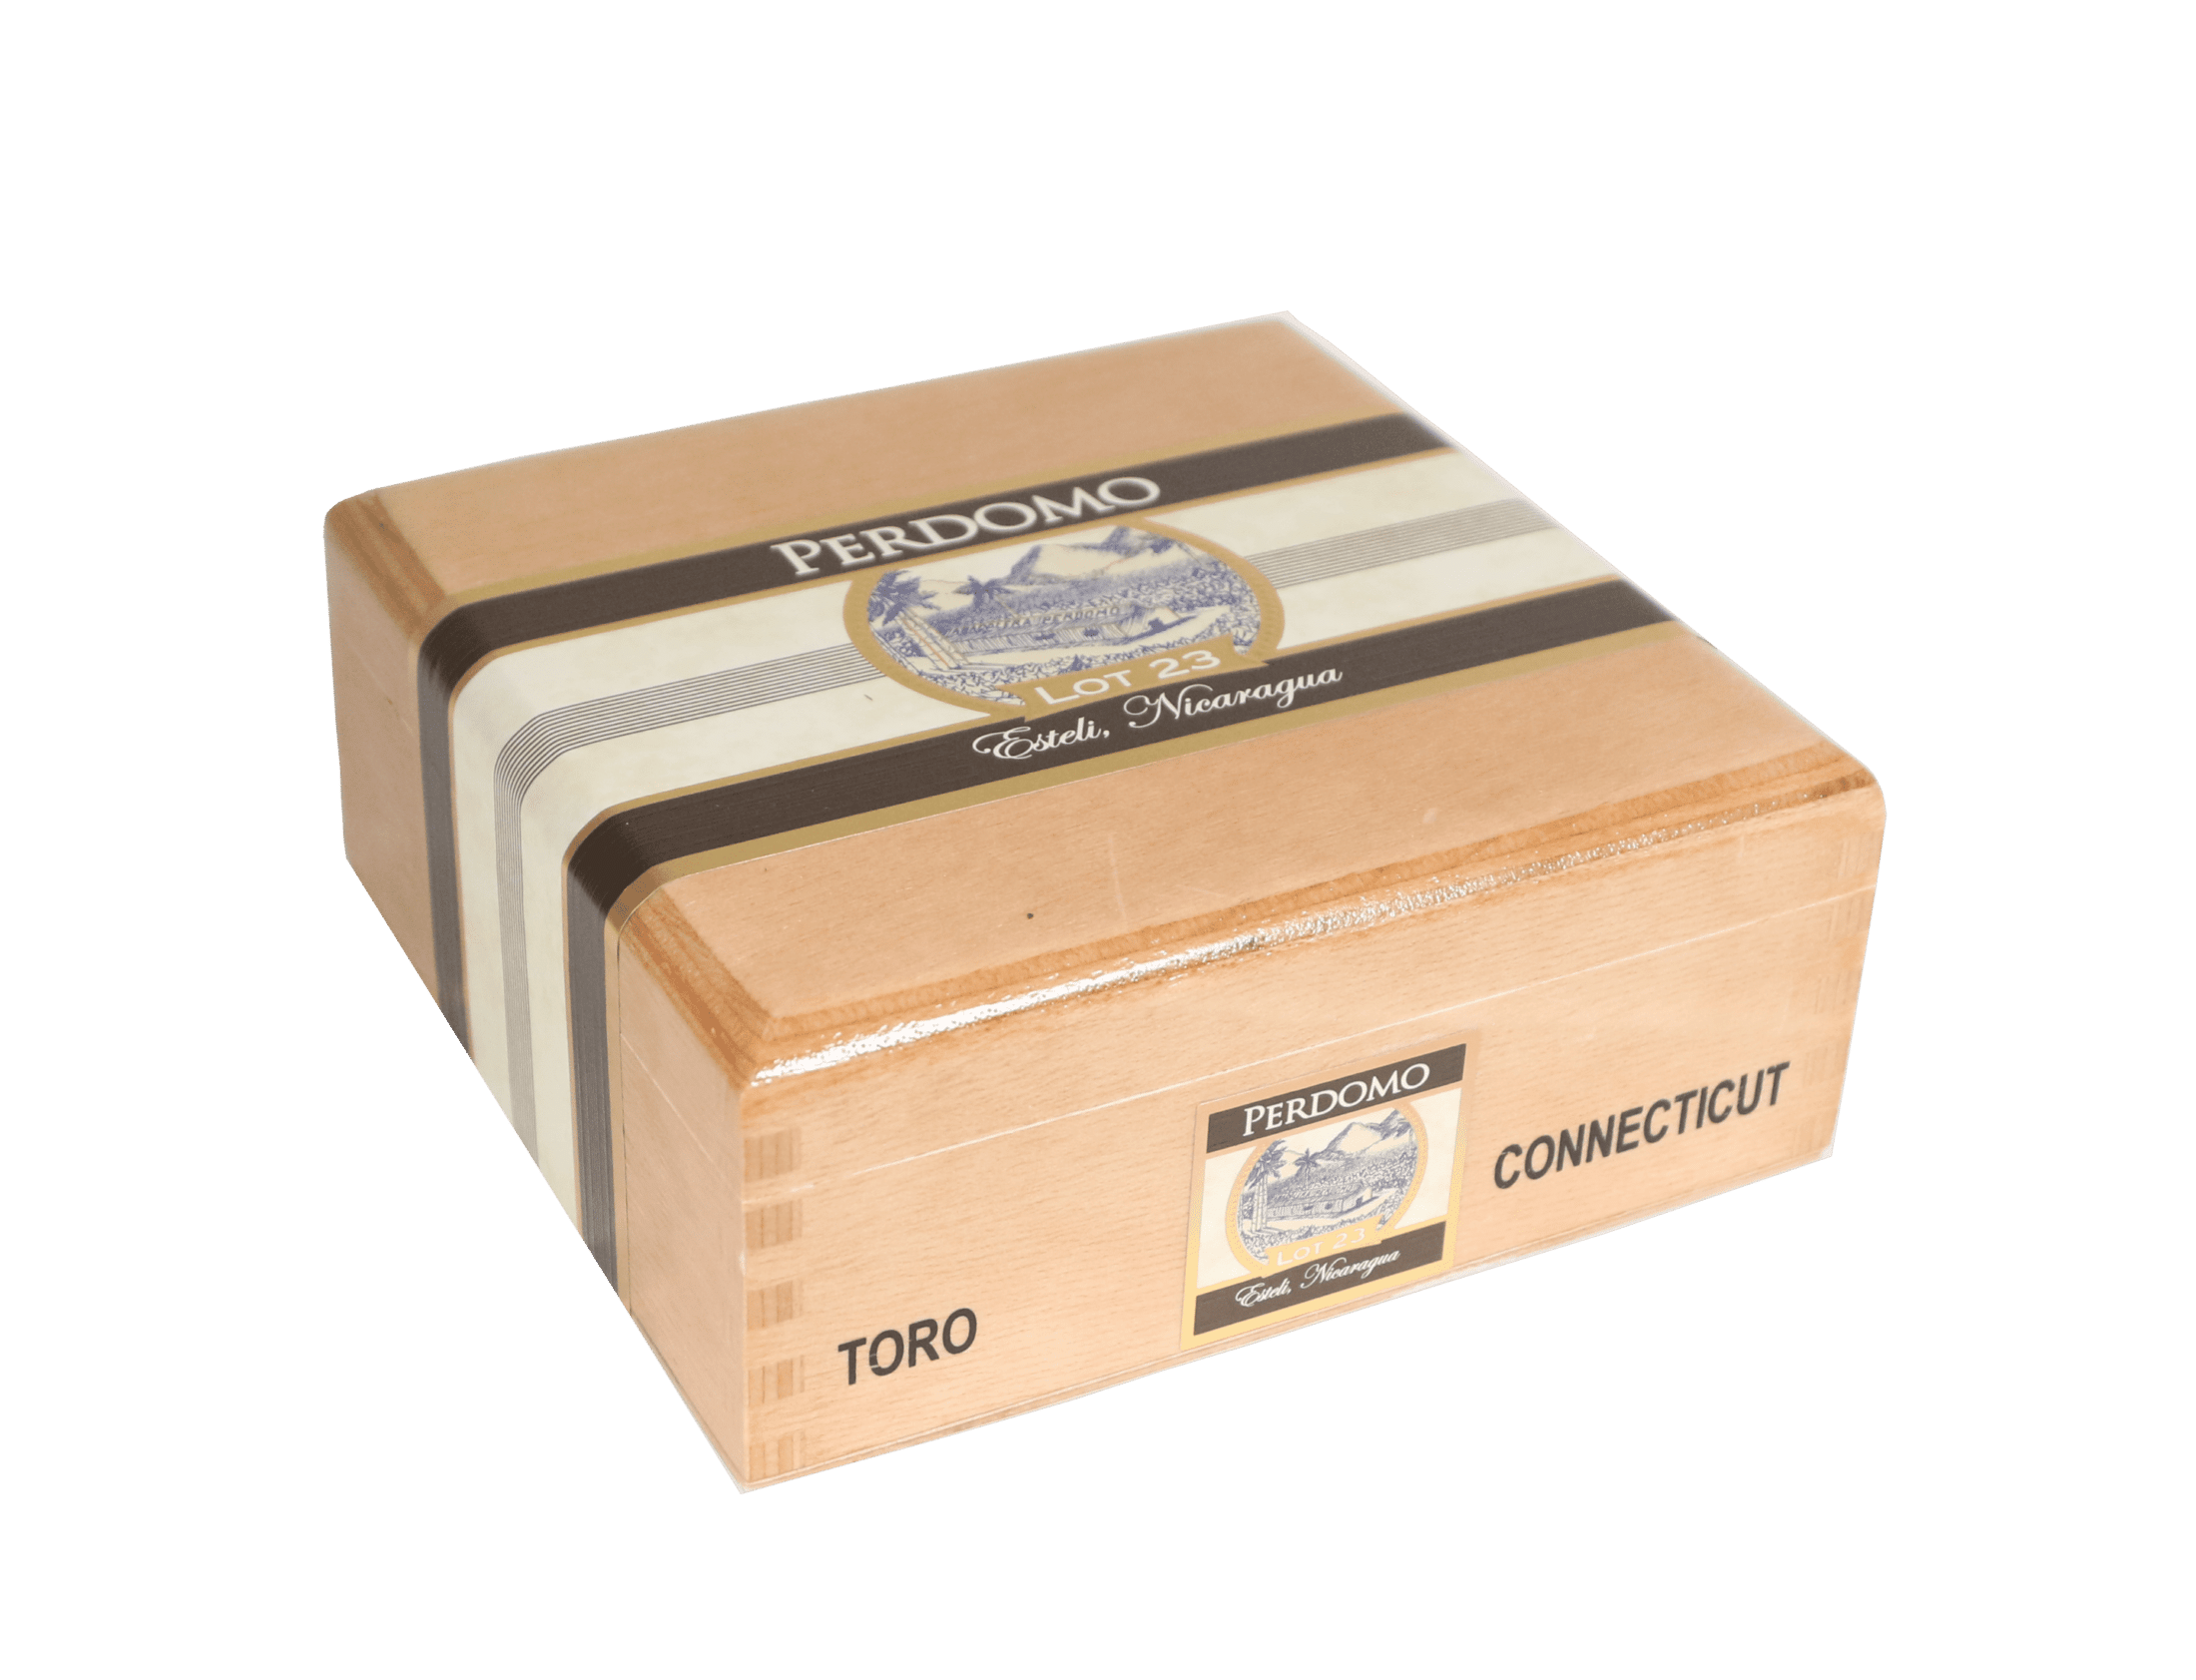 Closed box of 24 count Perdomo Lot 23 Connecticut Toro cigars